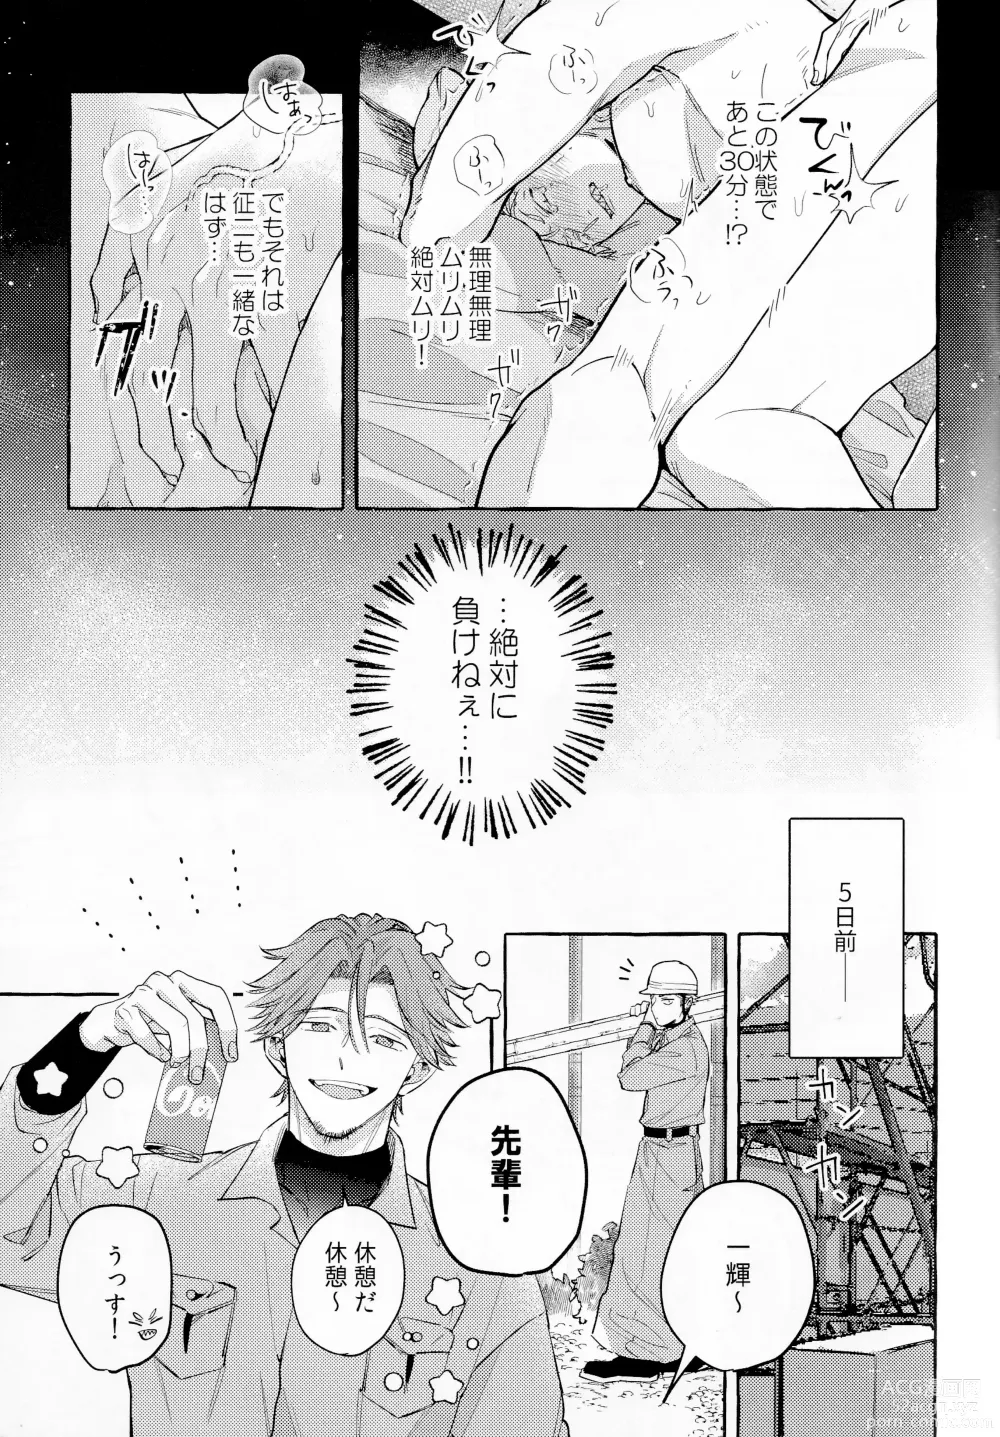 Page 6 of doujinshi skip run!run!run!